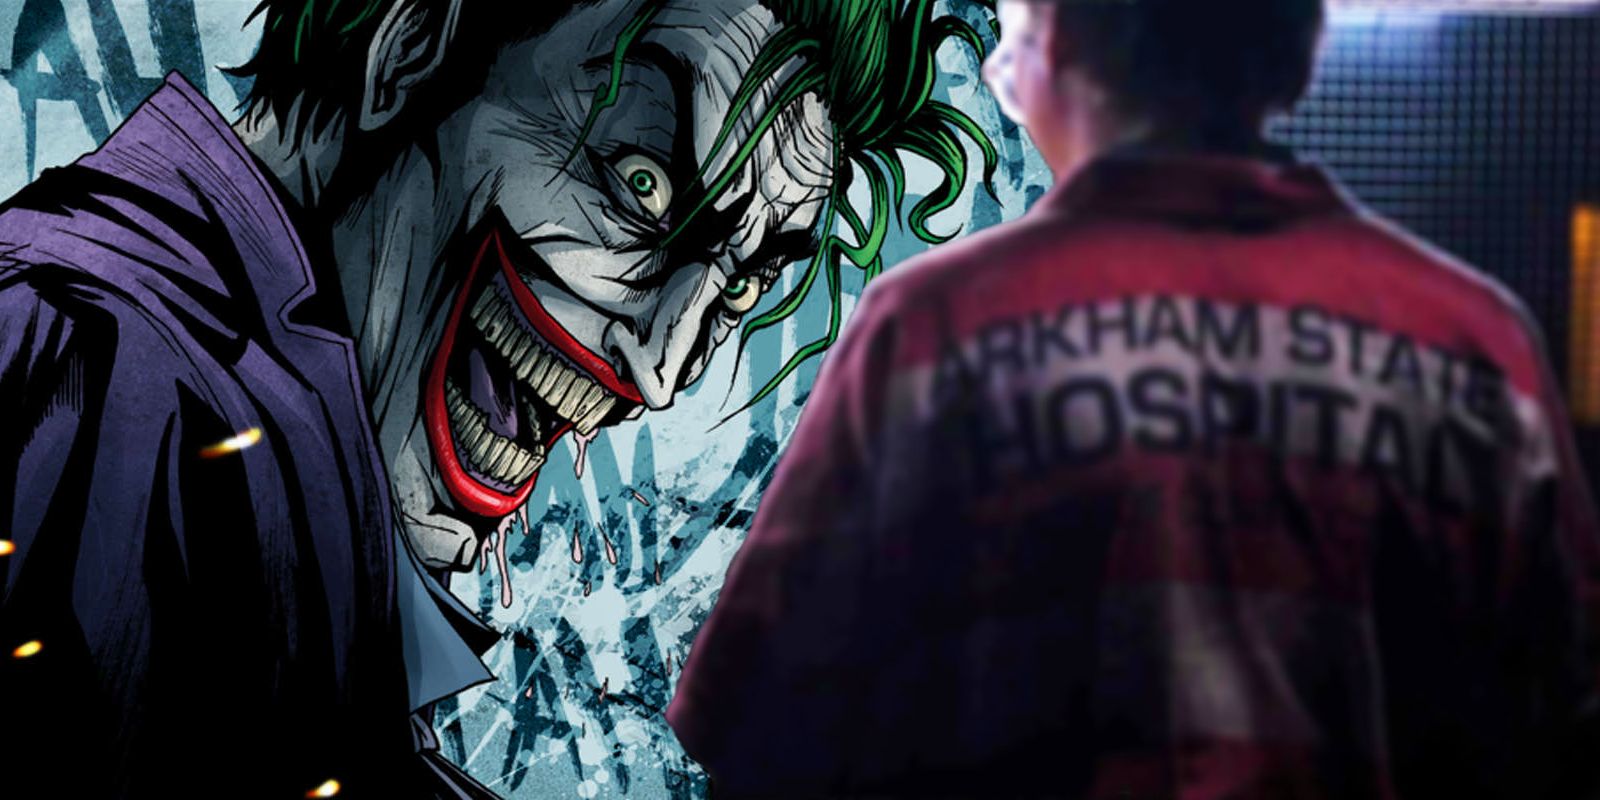 Blended image of The Joker and Paul Dano as the Riddler in The Batman